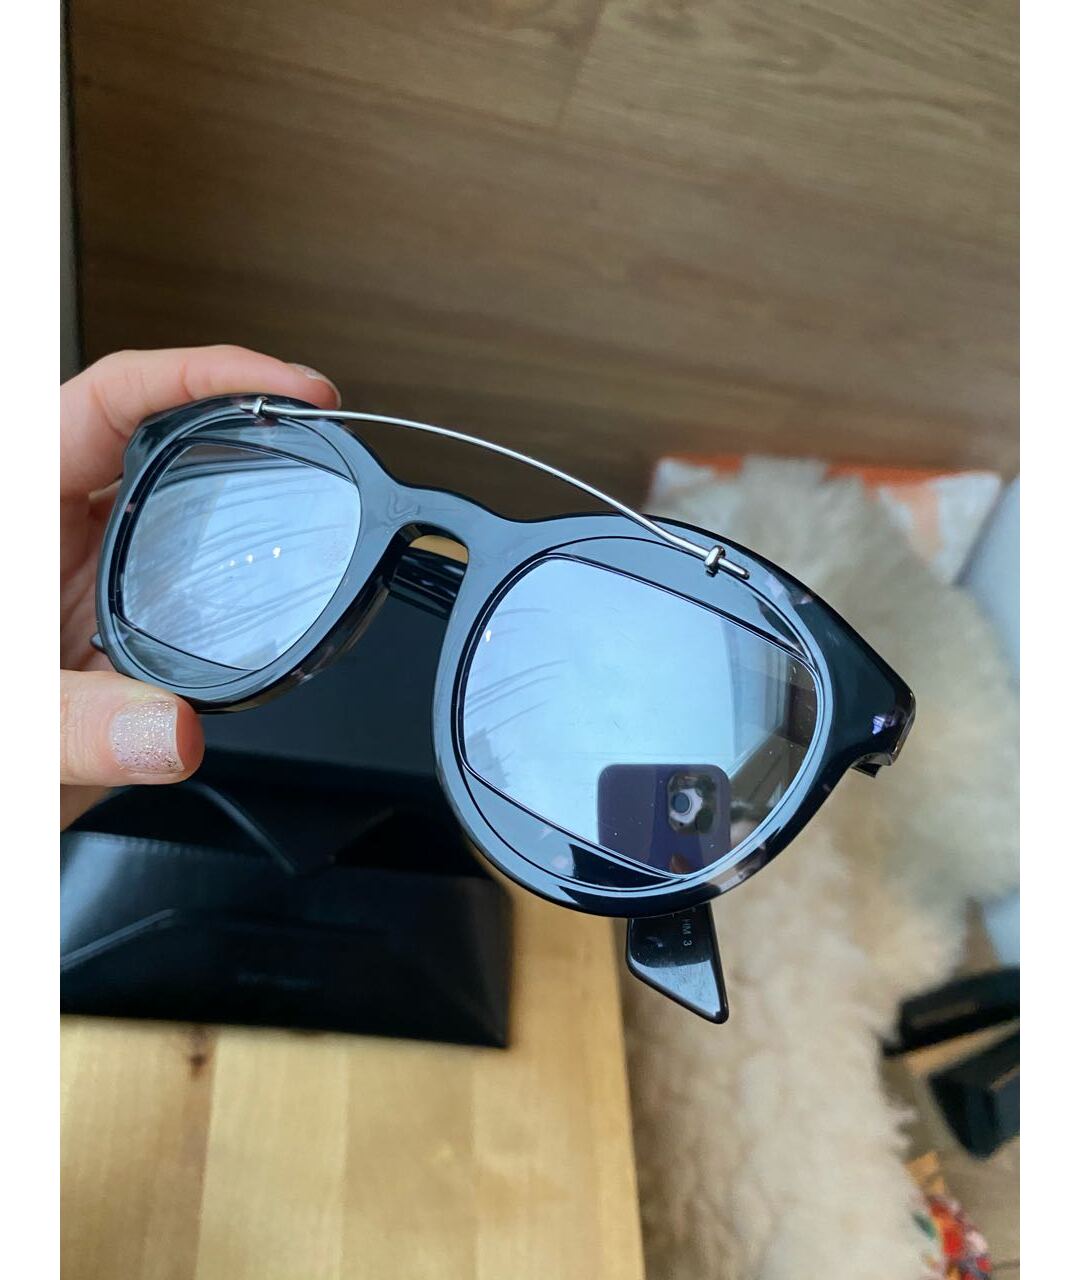 CHRISTIAN DIOR PRE-OWNED Антрацитовые пластиковые солнцезащитные очки, фото 2